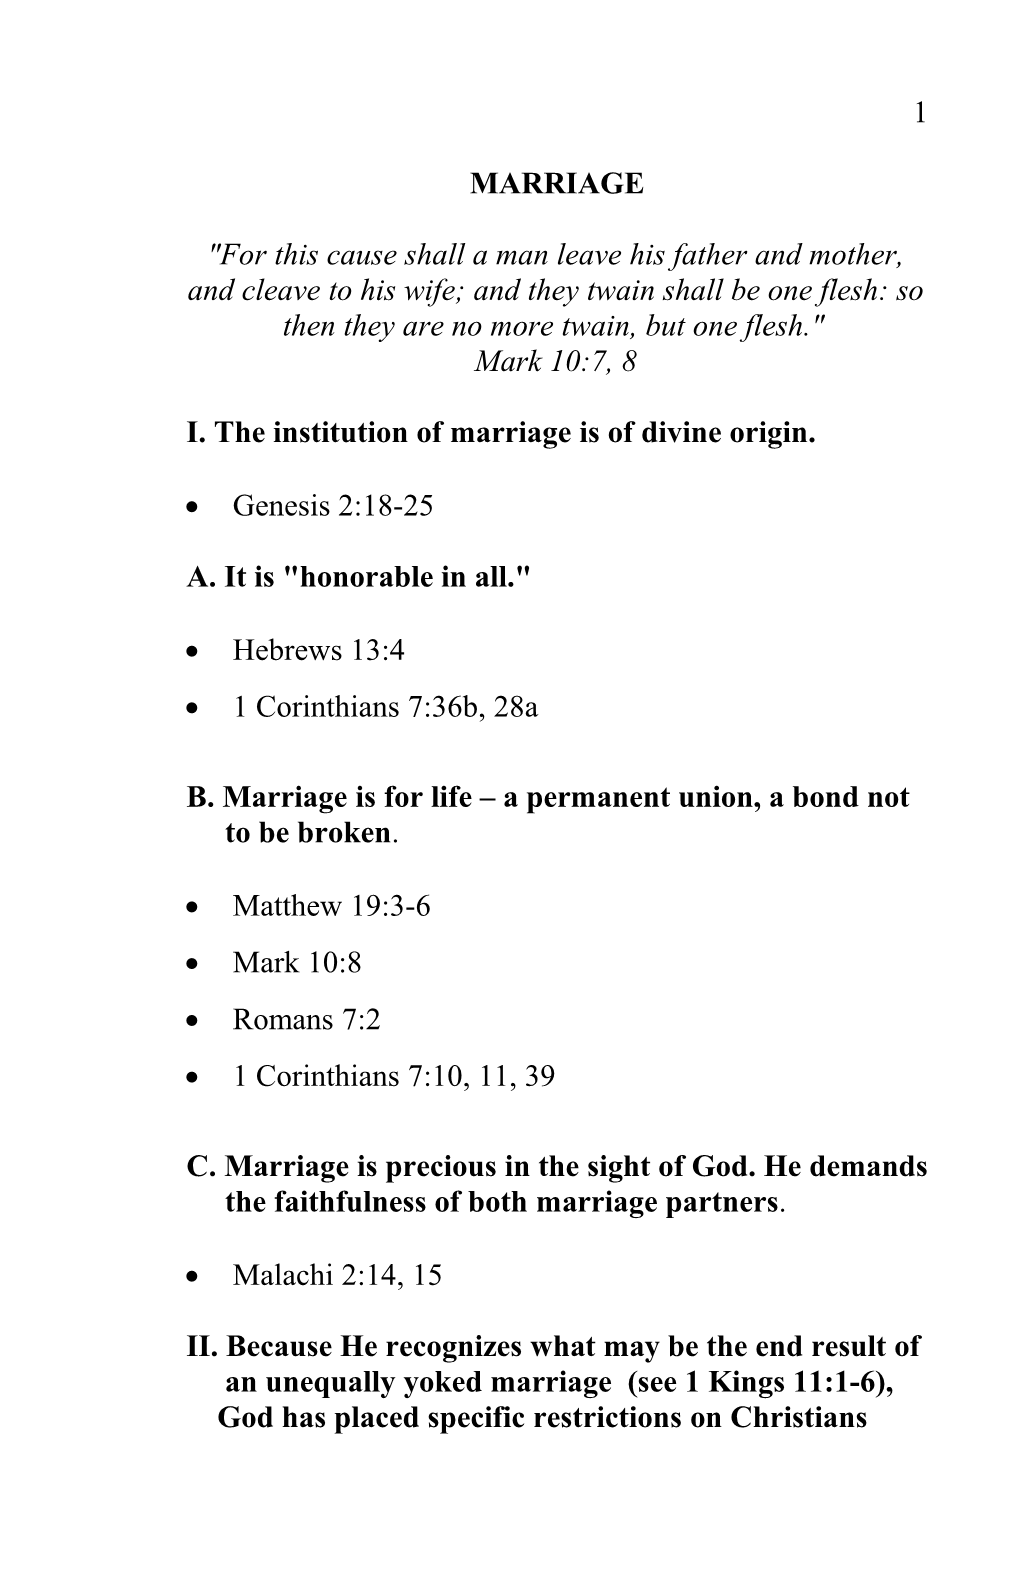 I. the Institution of Marriage Is of Divine Origin